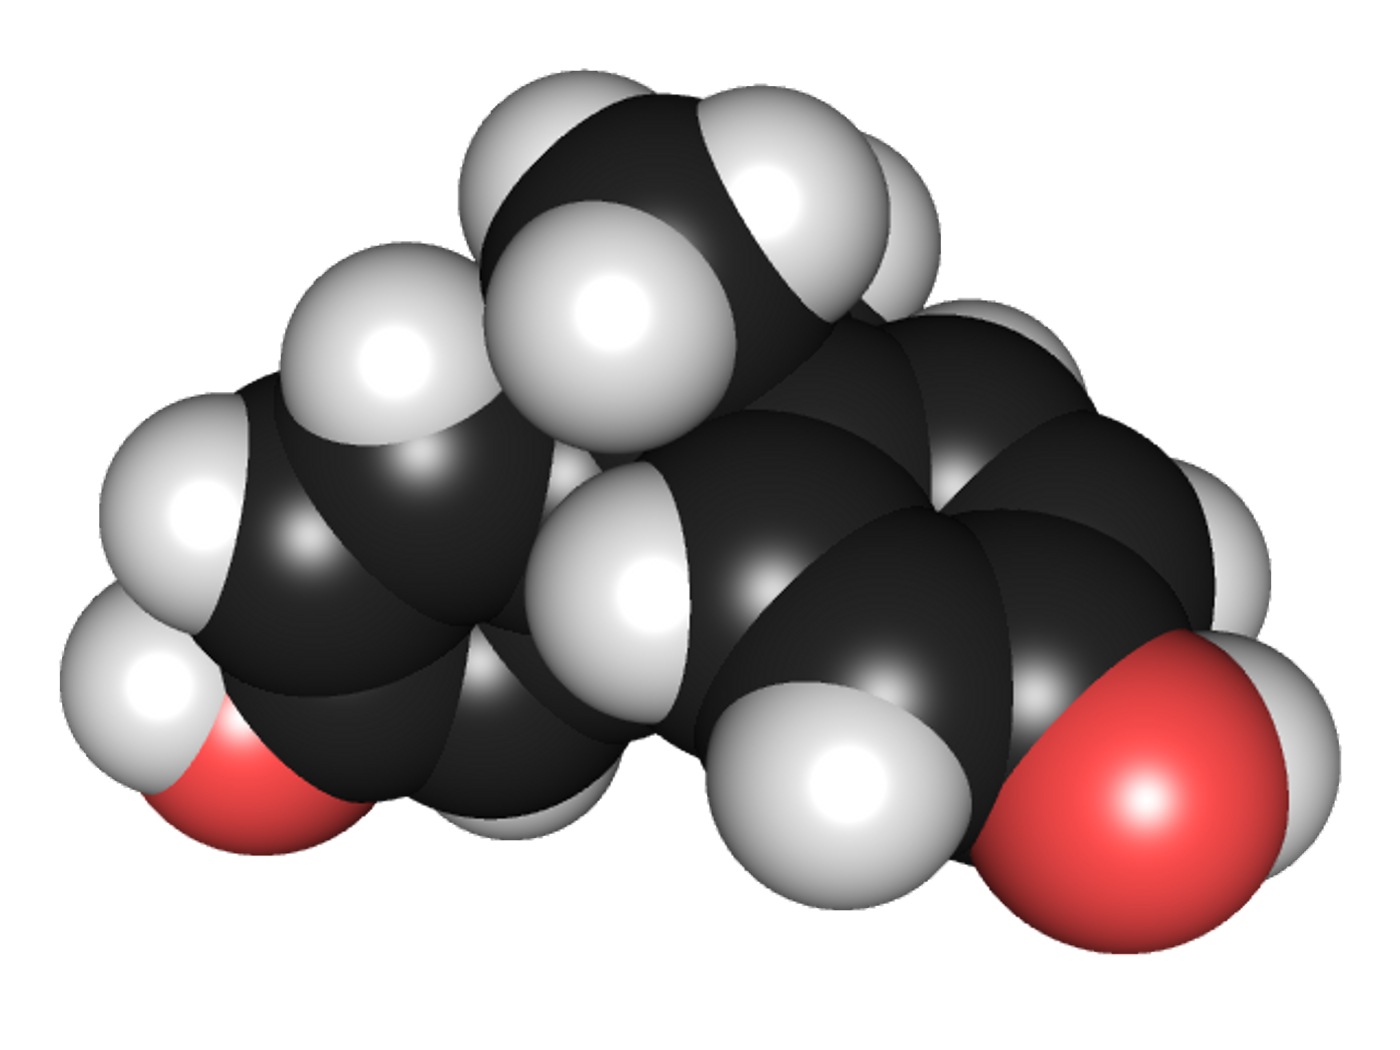 3D chemical structure of bisphenol A / Credit: Wikimedia/Edgar181